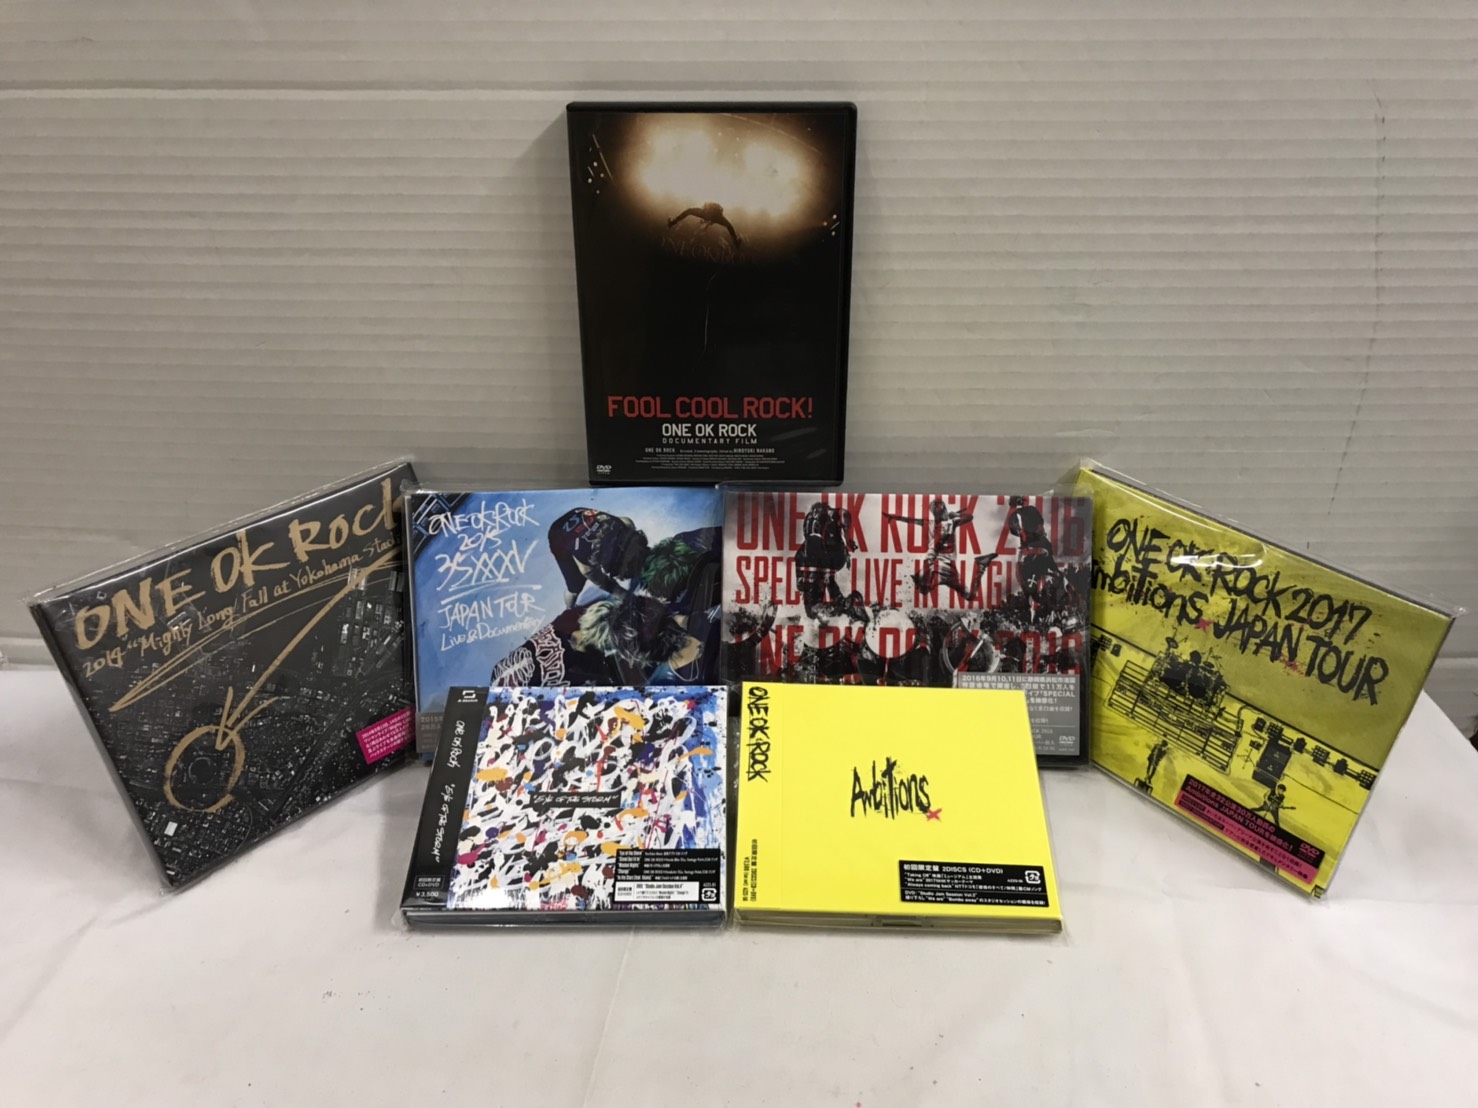 Cd Dvd 8 27 買取商品のご紹介です One Ok Rockのcd Dvd をたくさんお持ちいただきました 邦楽cd Dvd ワンオク バンド マンガ倉庫 武雄店ホームページ